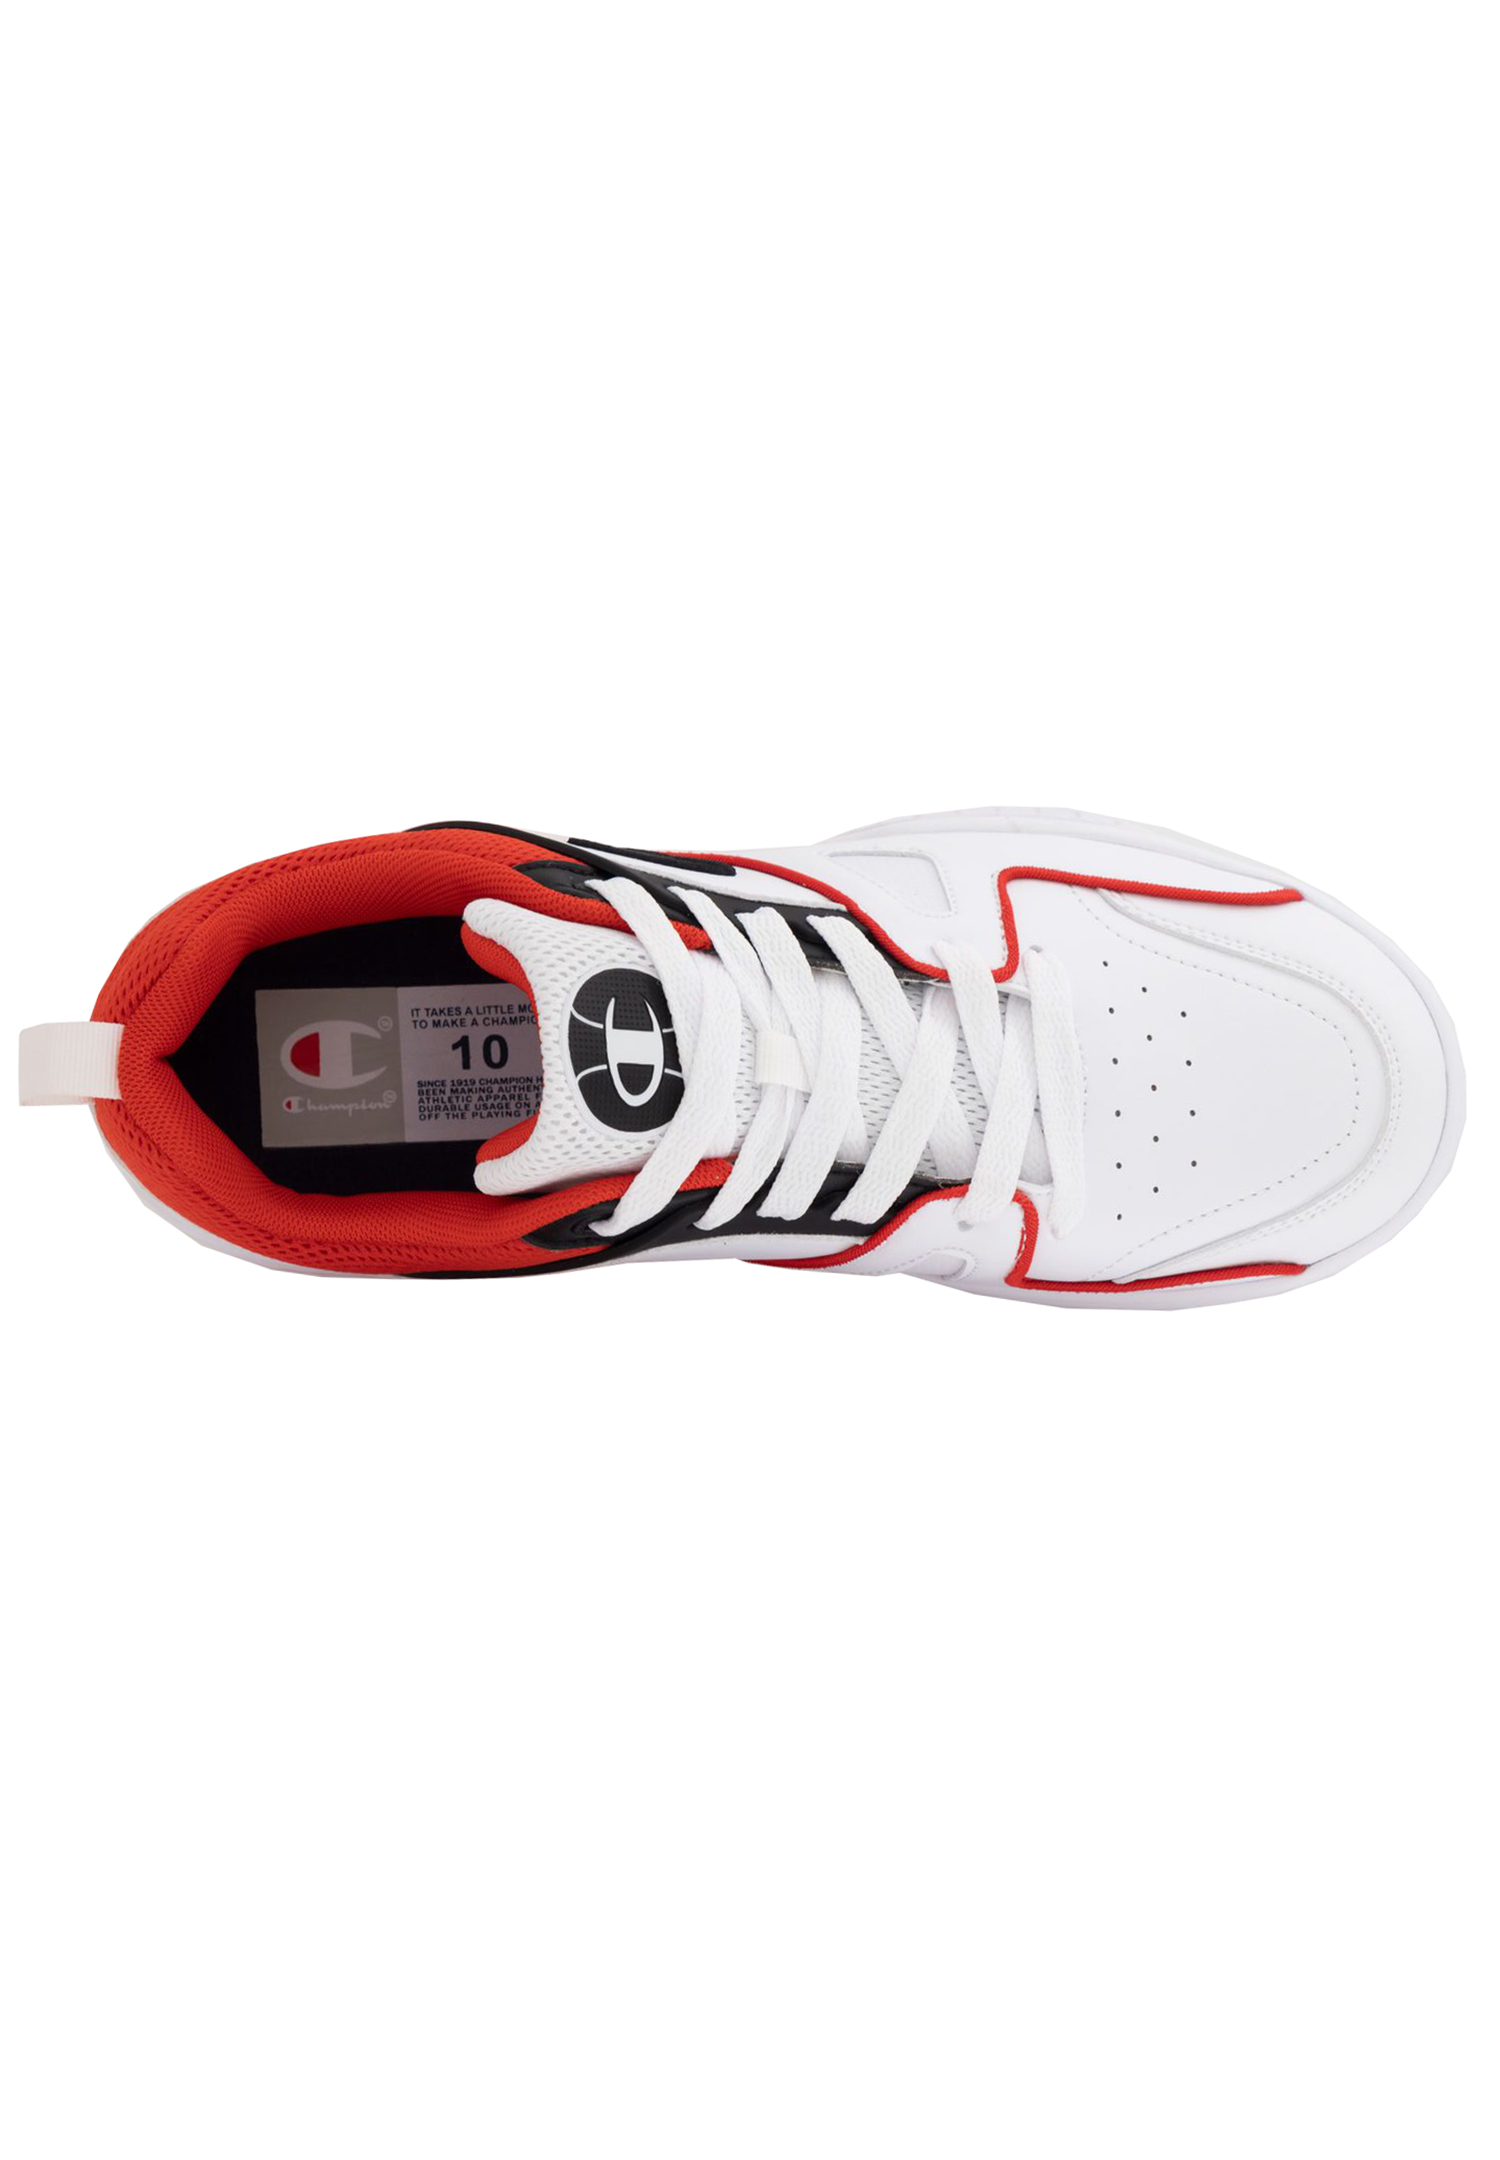 Champion 3 Point Low Herren Sneaker S21882-CHA-WW006 weiß/schwarz/rot